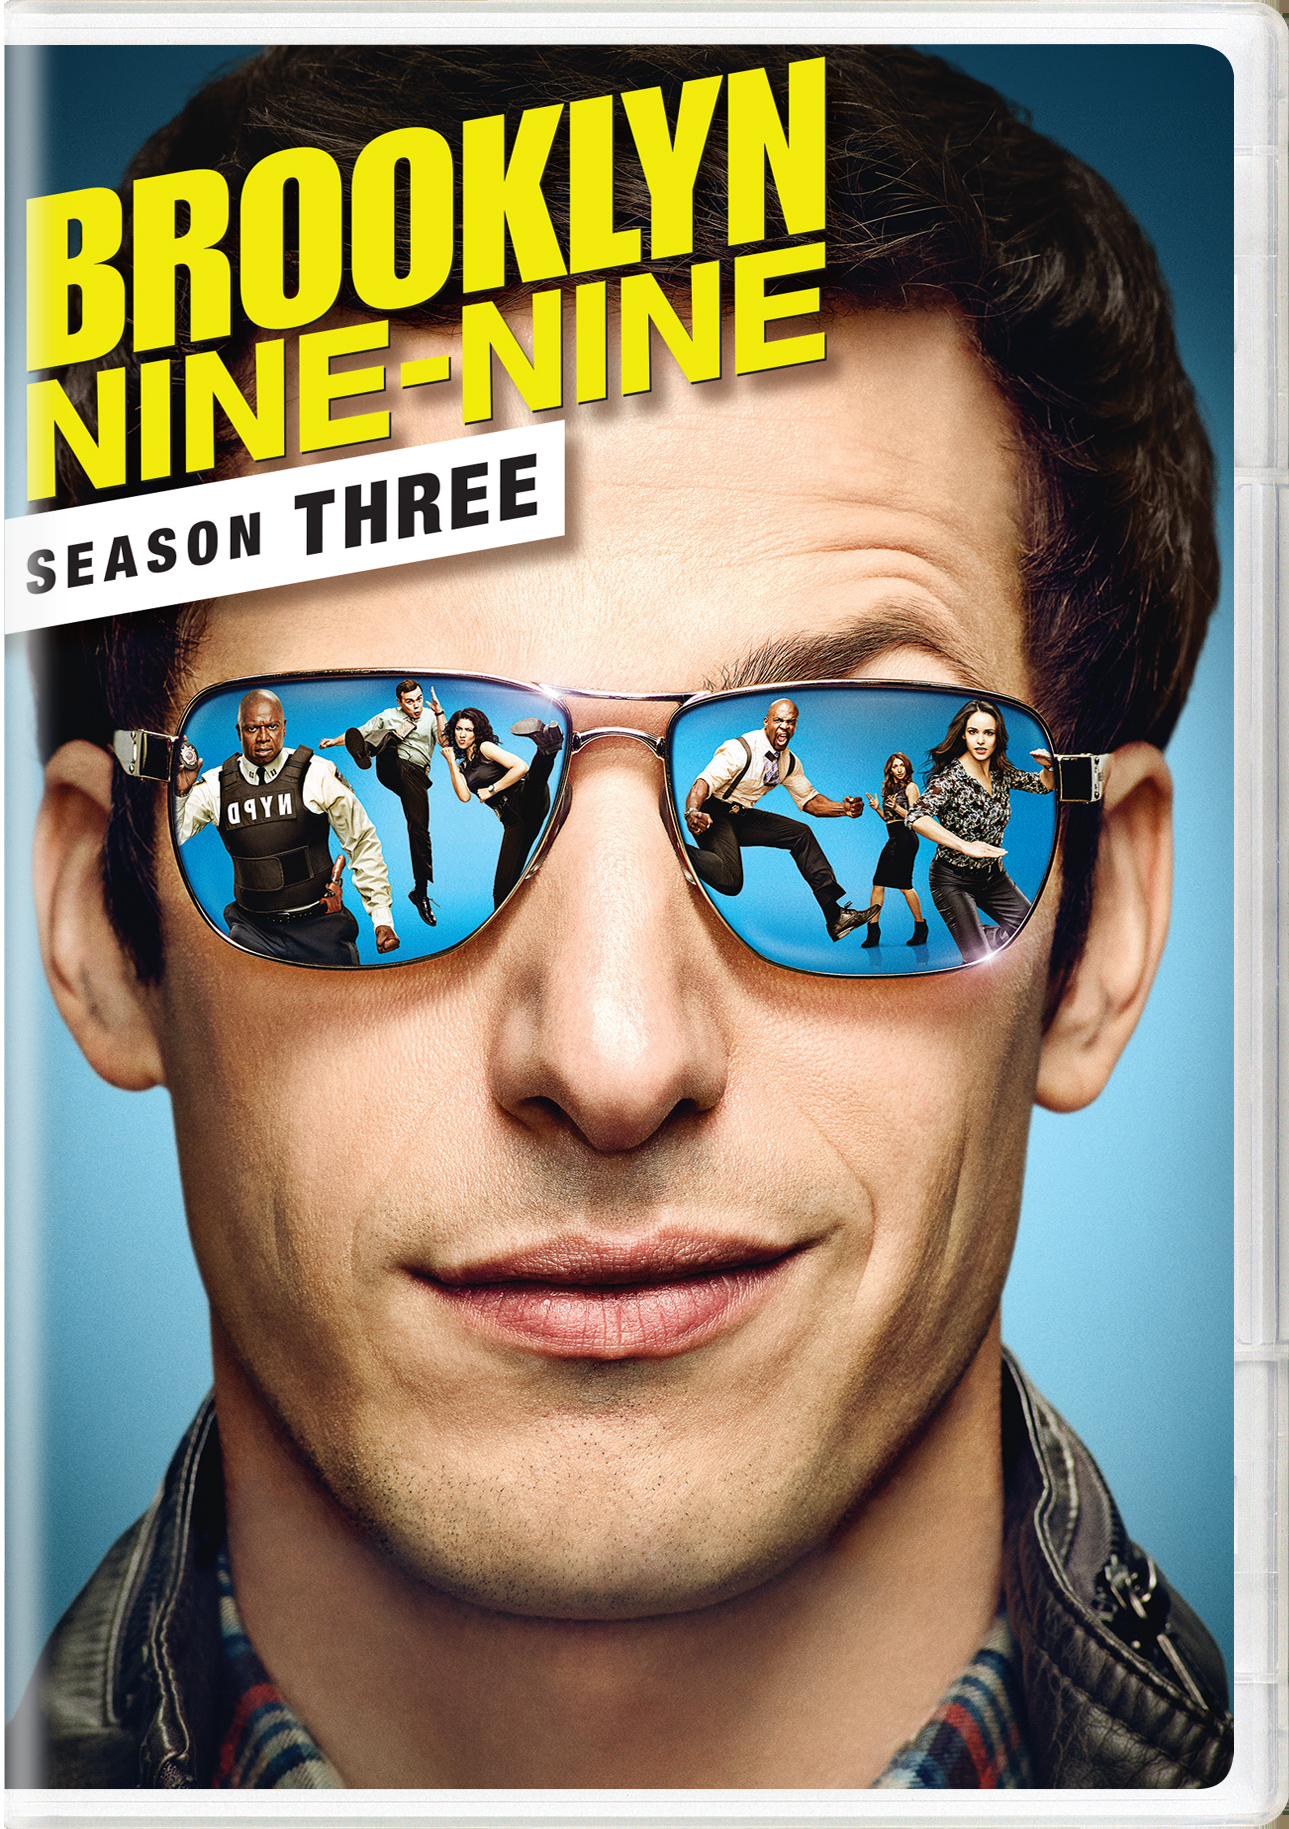 Brooklyn Nine-Nine: Season 3 - DVD   - Comedy Television On DVD - TV Shows On GRUV